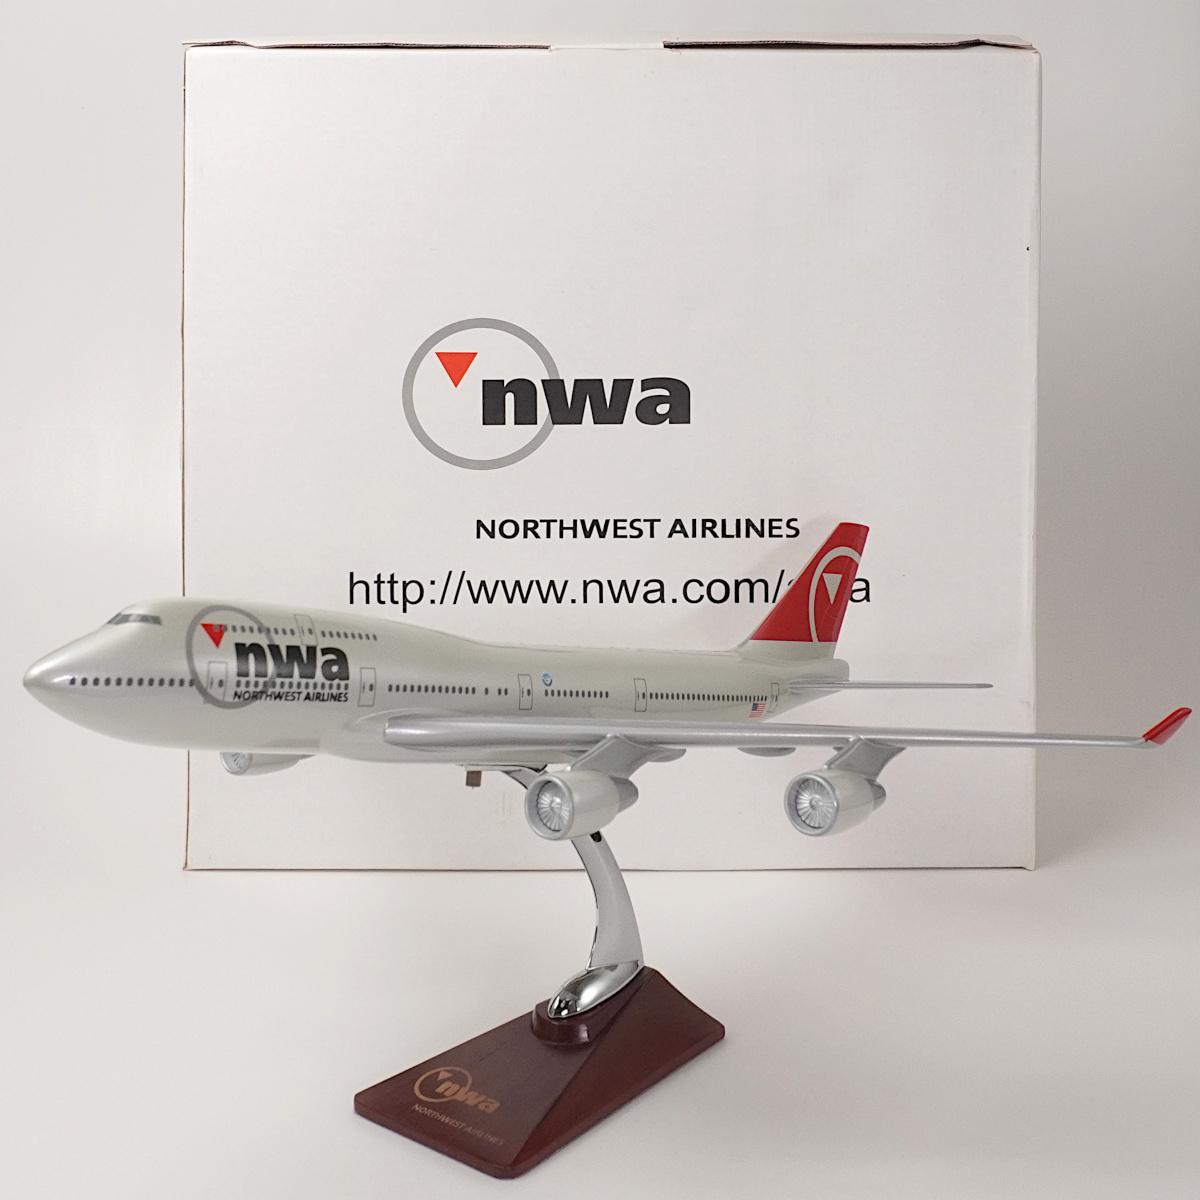 ★nwa ノースウエスト航空 ボーイング747 全長 約49cm ジャンボジェット 航空機 飛行機 旅客機 模型 Northwest Airlines Boeing747★